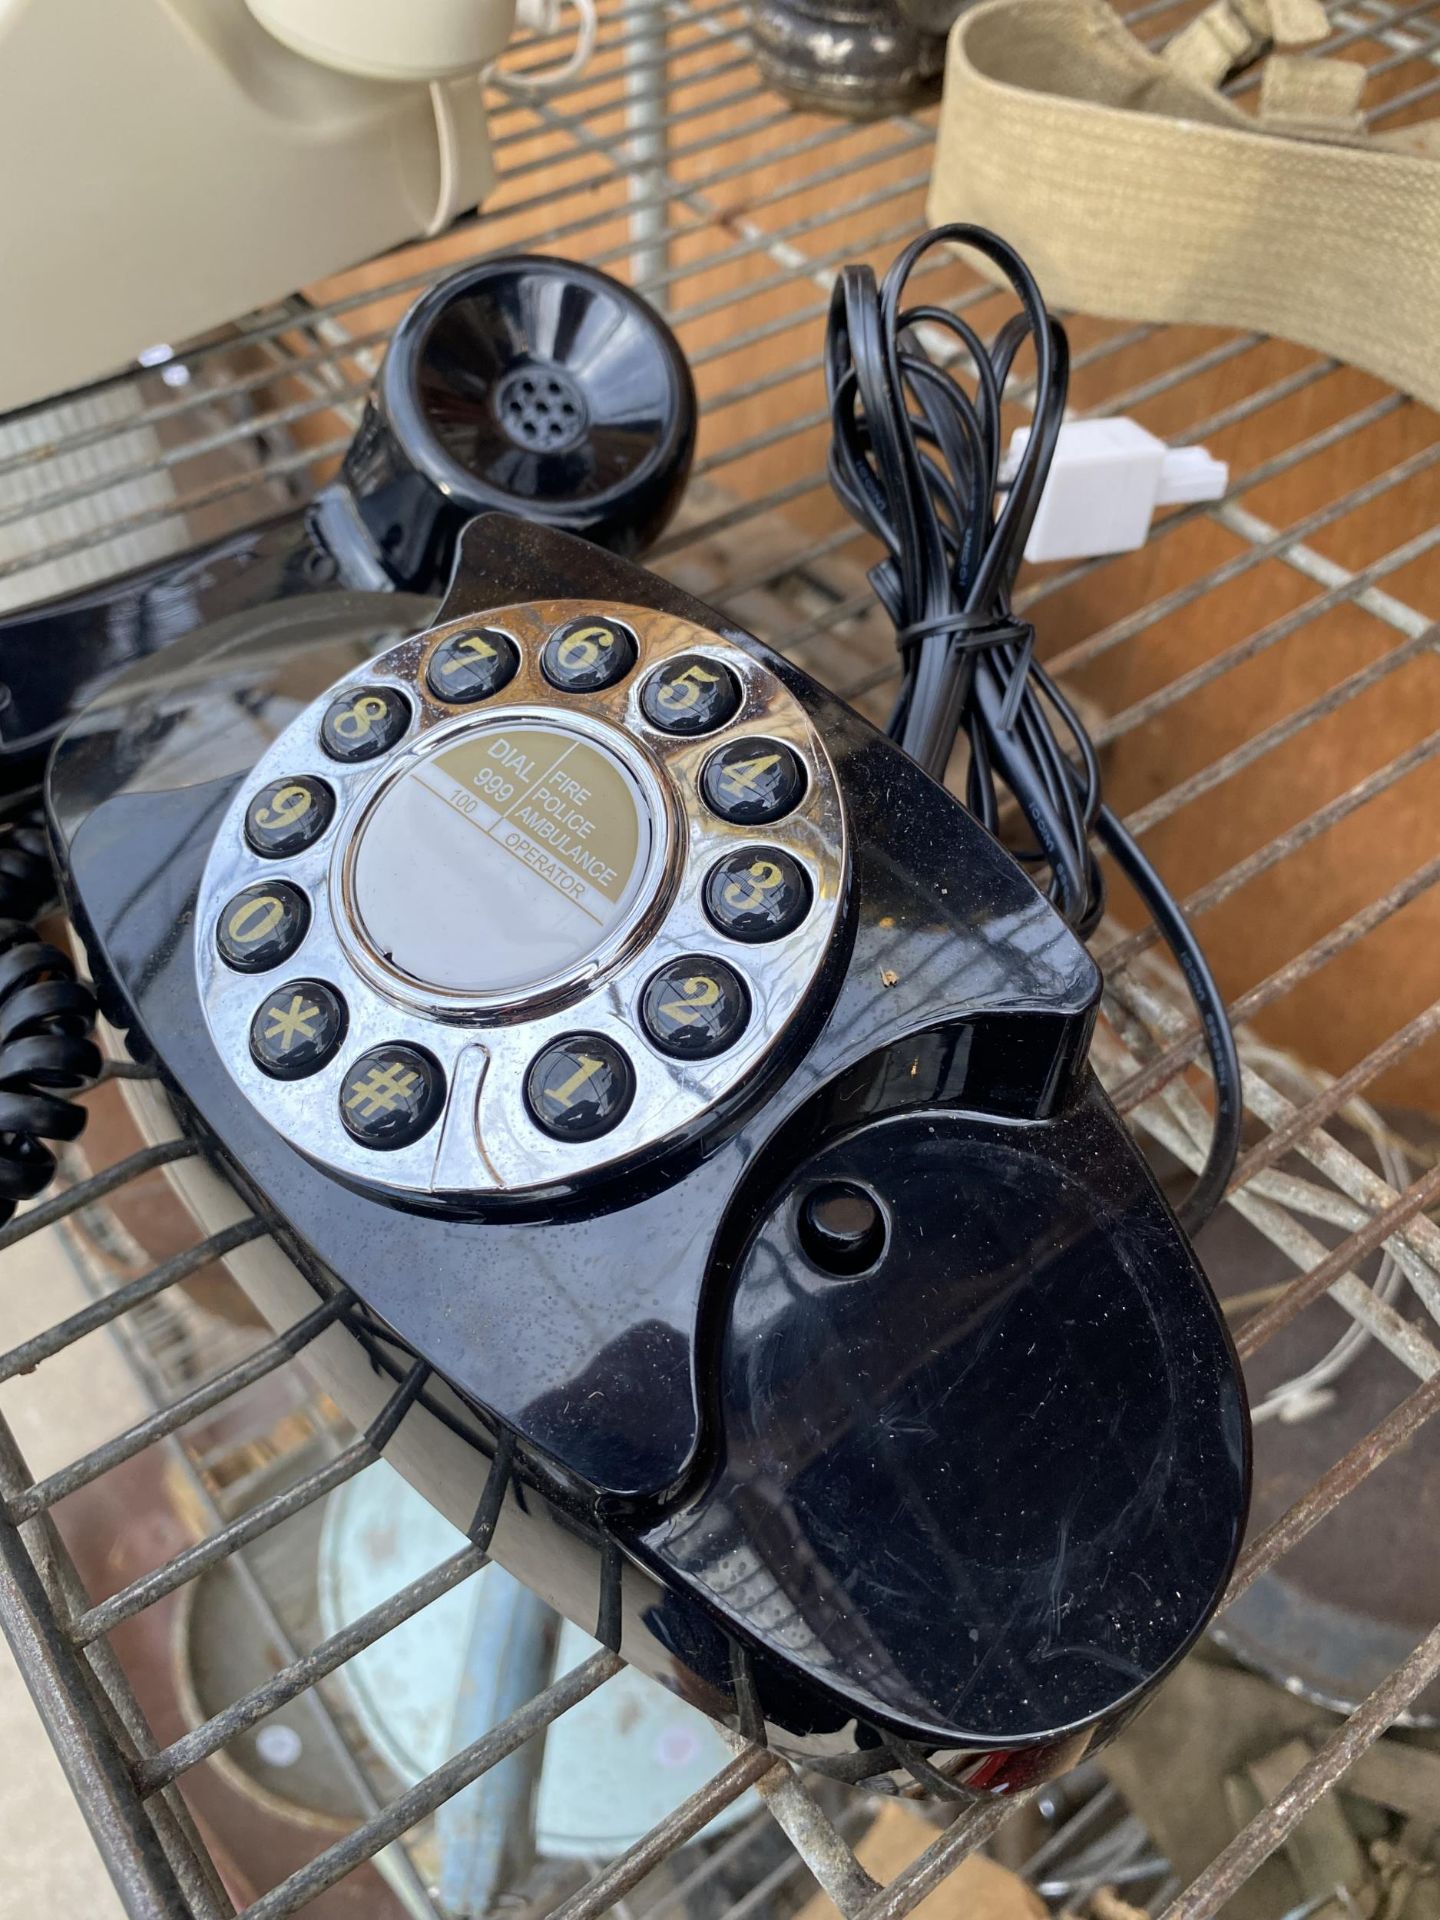 A RETRO GPO PUSH BUTTON TELEPHONE - Image 3 of 3